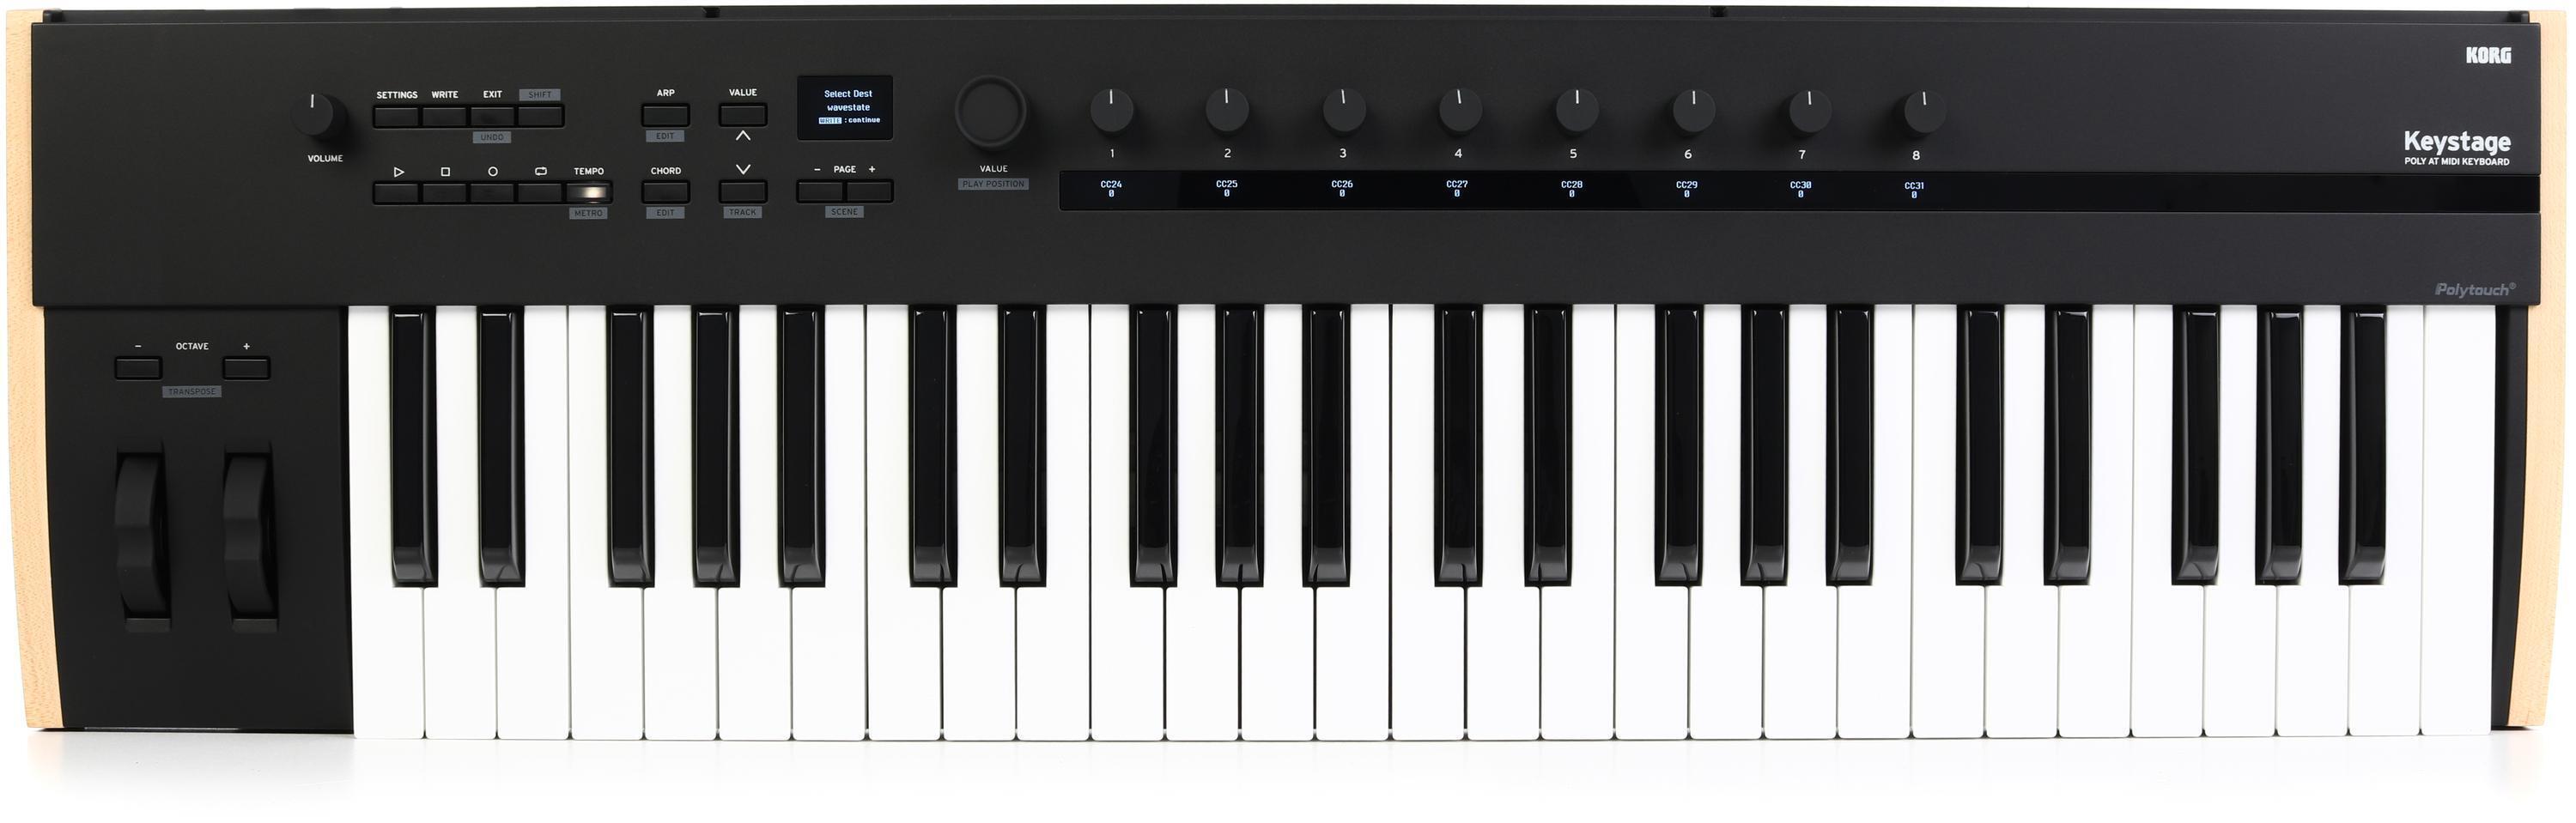 Bundled Item: Korg Keystage 49-key MIDI Keyboard Controller